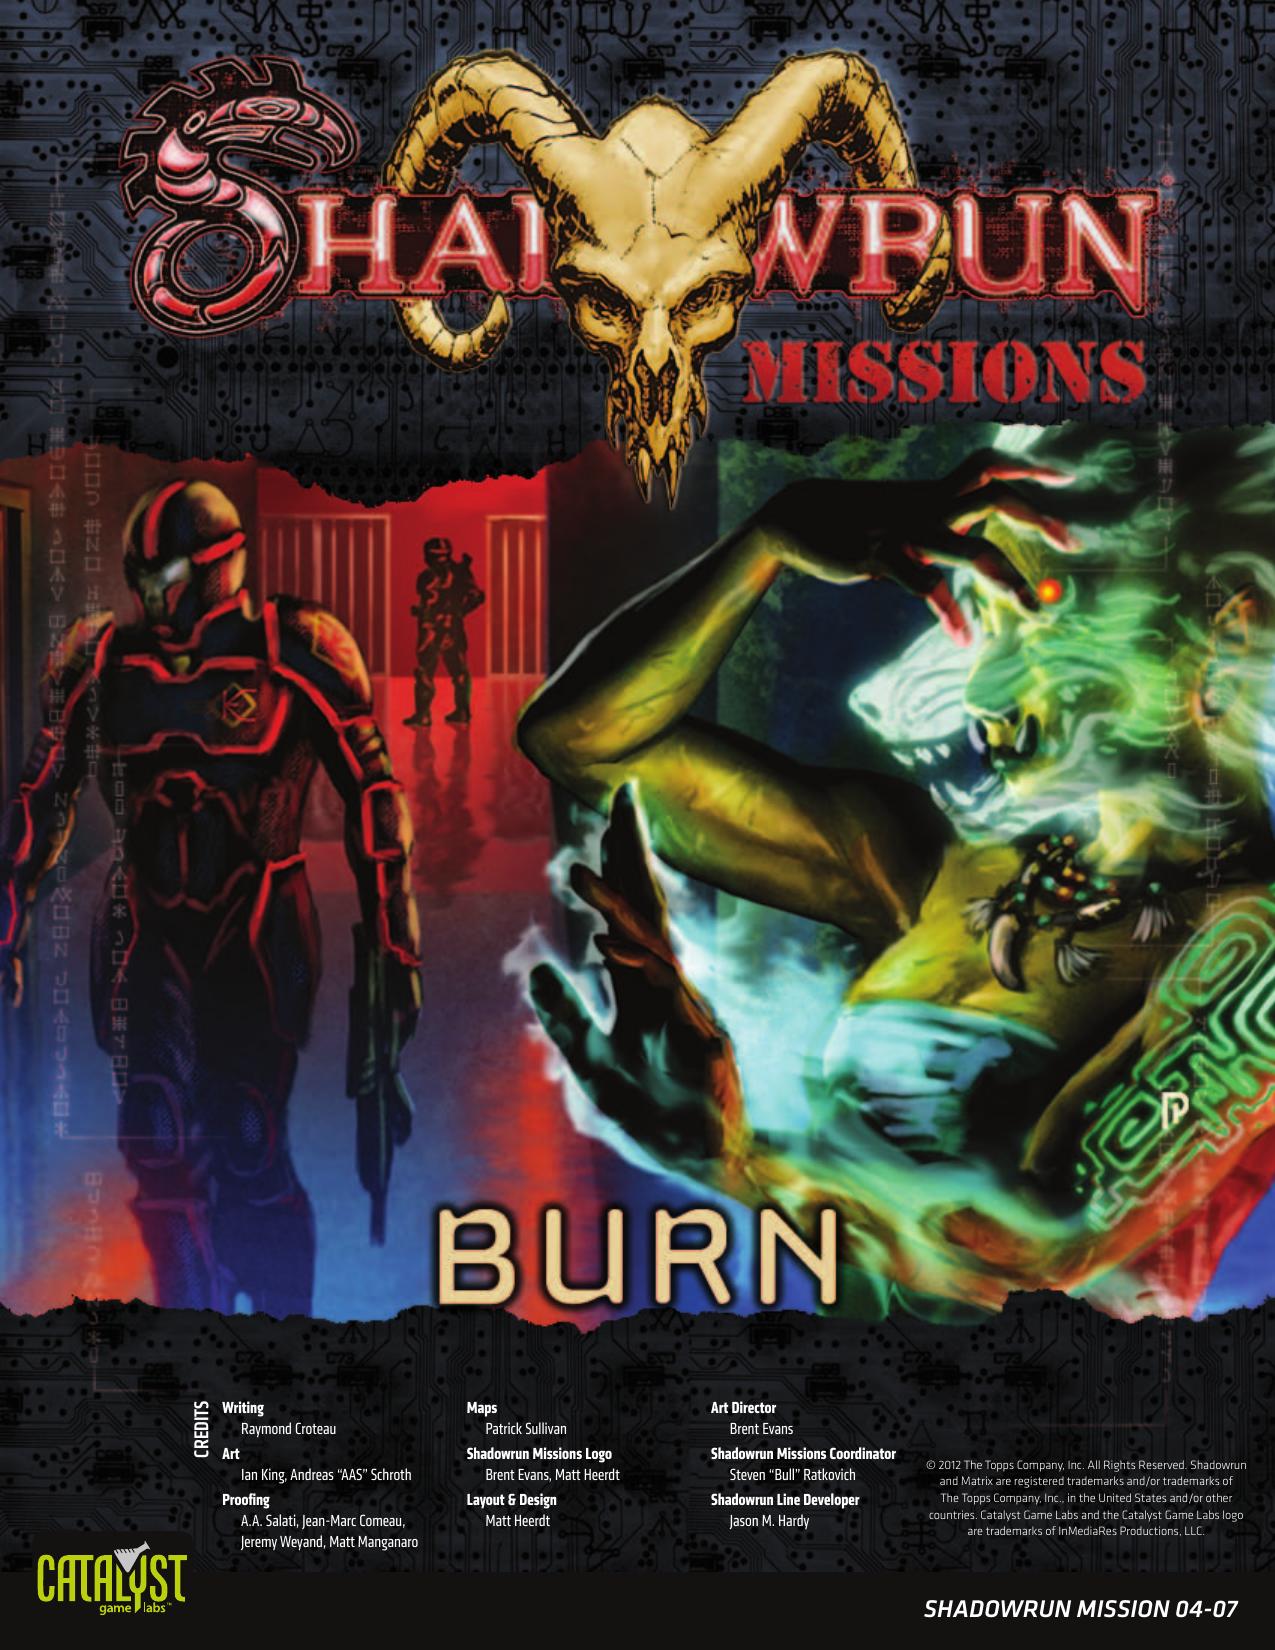 Shadowrun Missions: Burn (04-07)